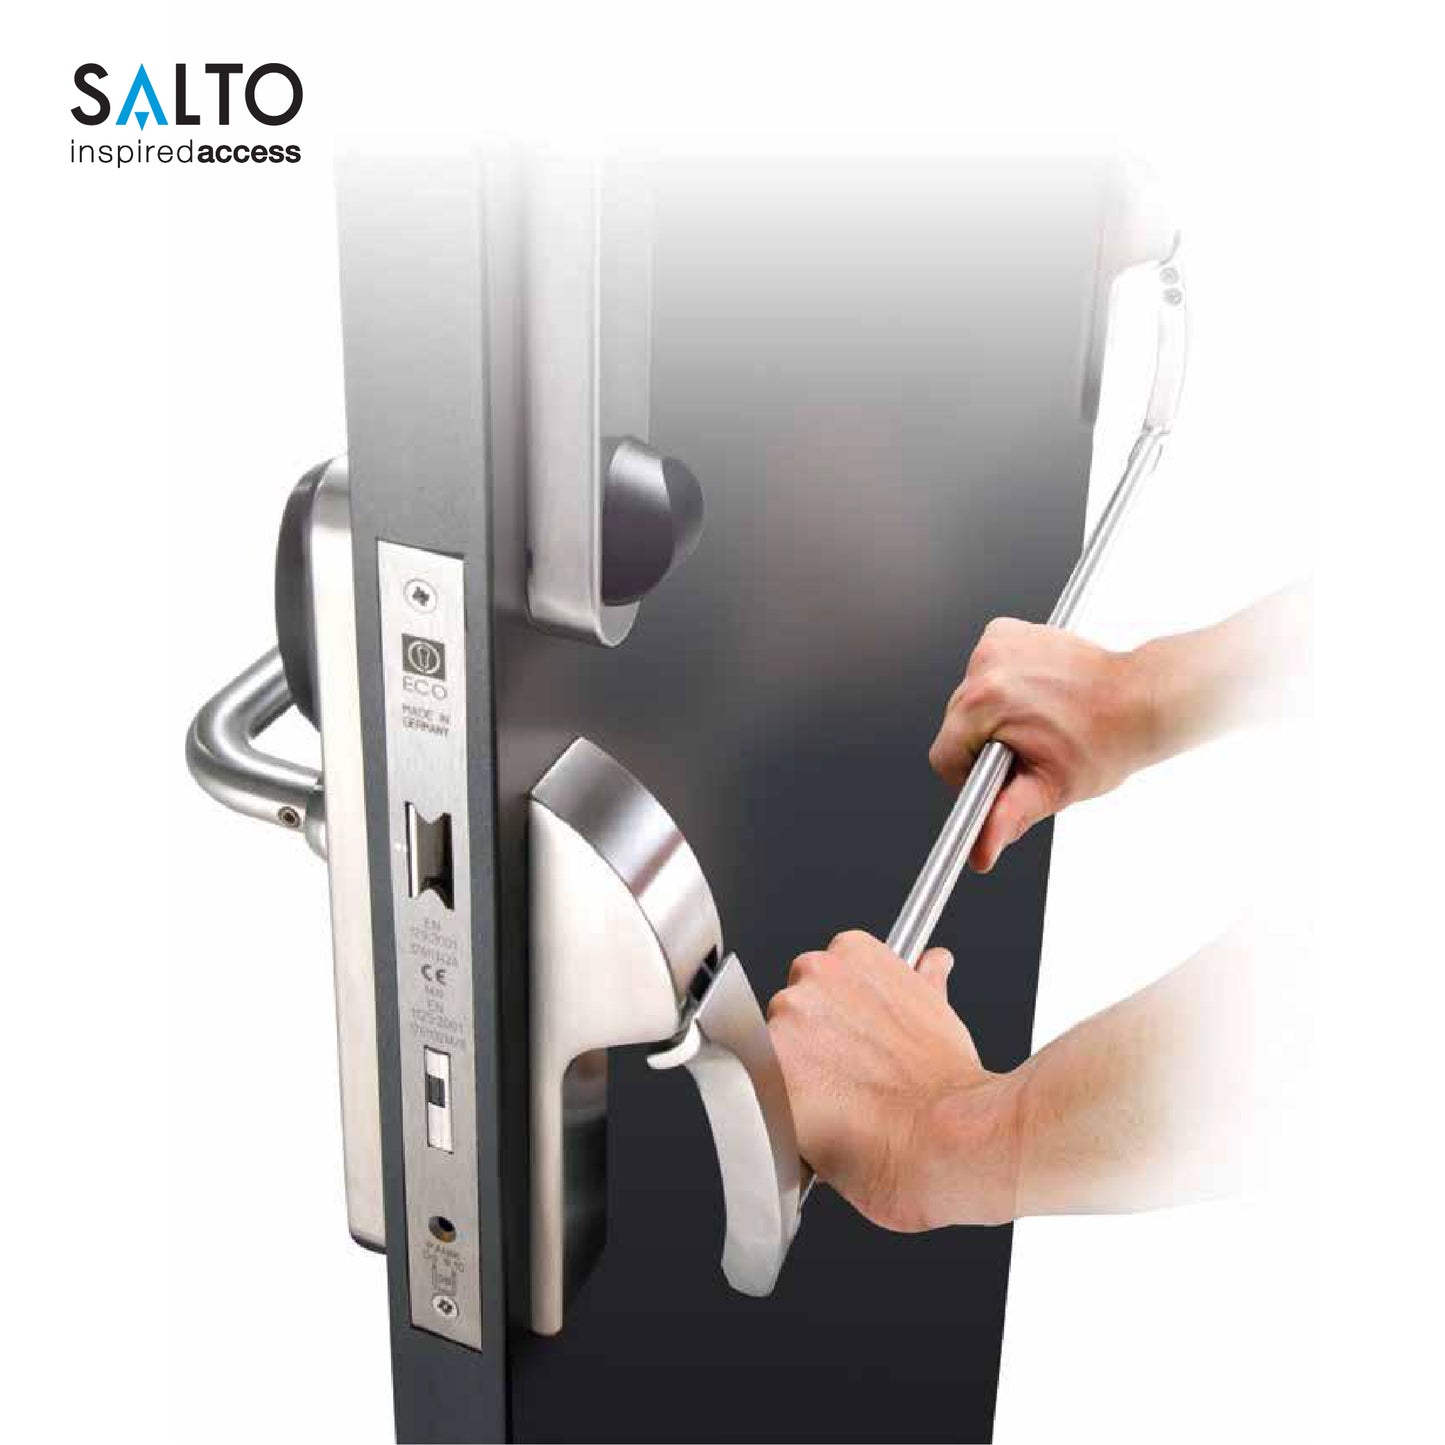 Salto access control Sri Lanka - XS4 Panic devices